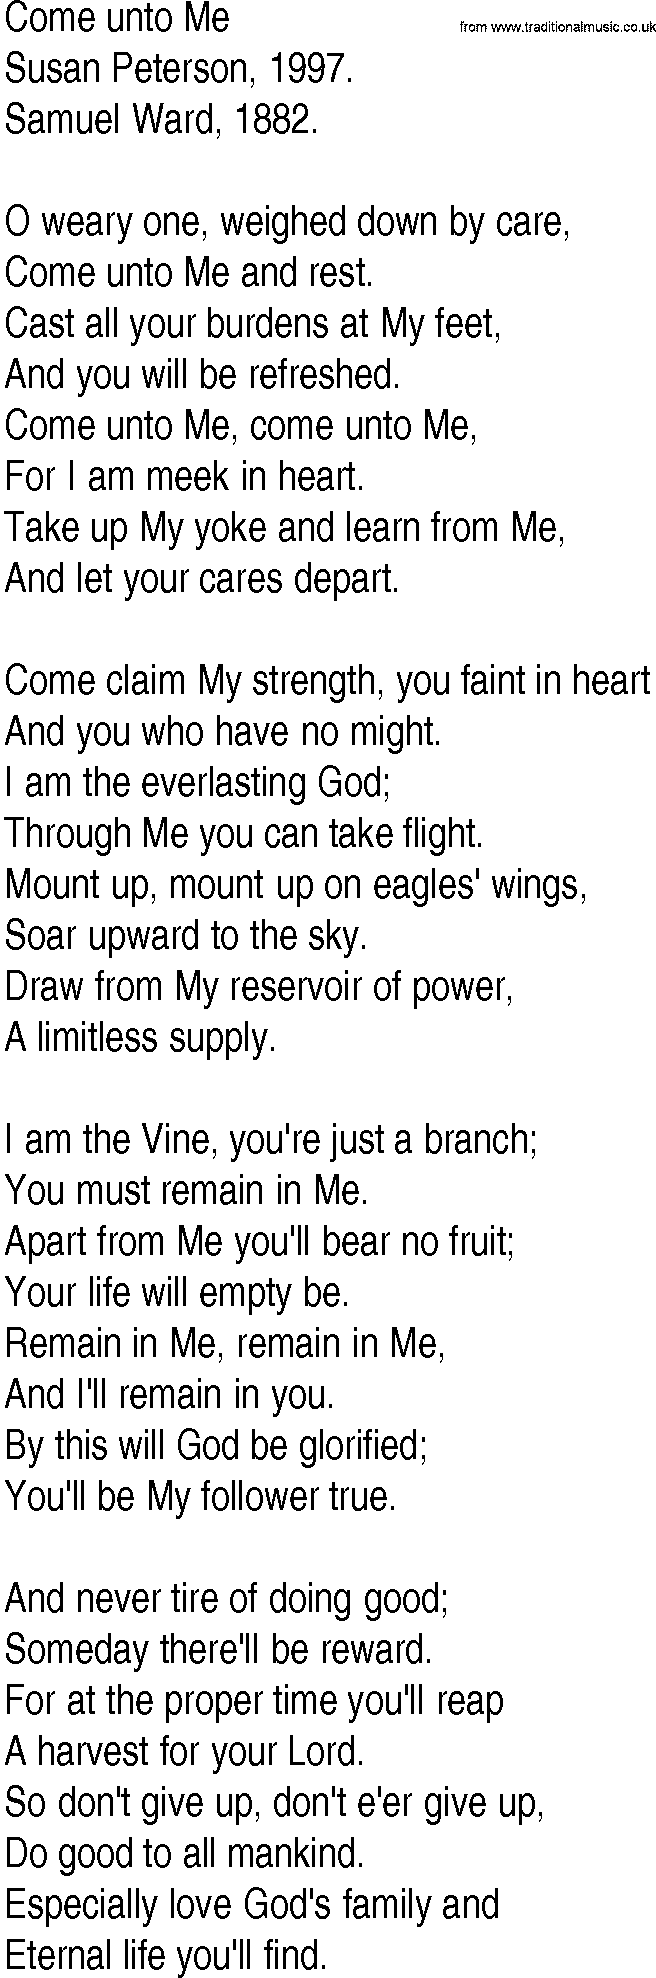 Hymn and Gospel Song: Come unto Me by Susan Peterson lyrics